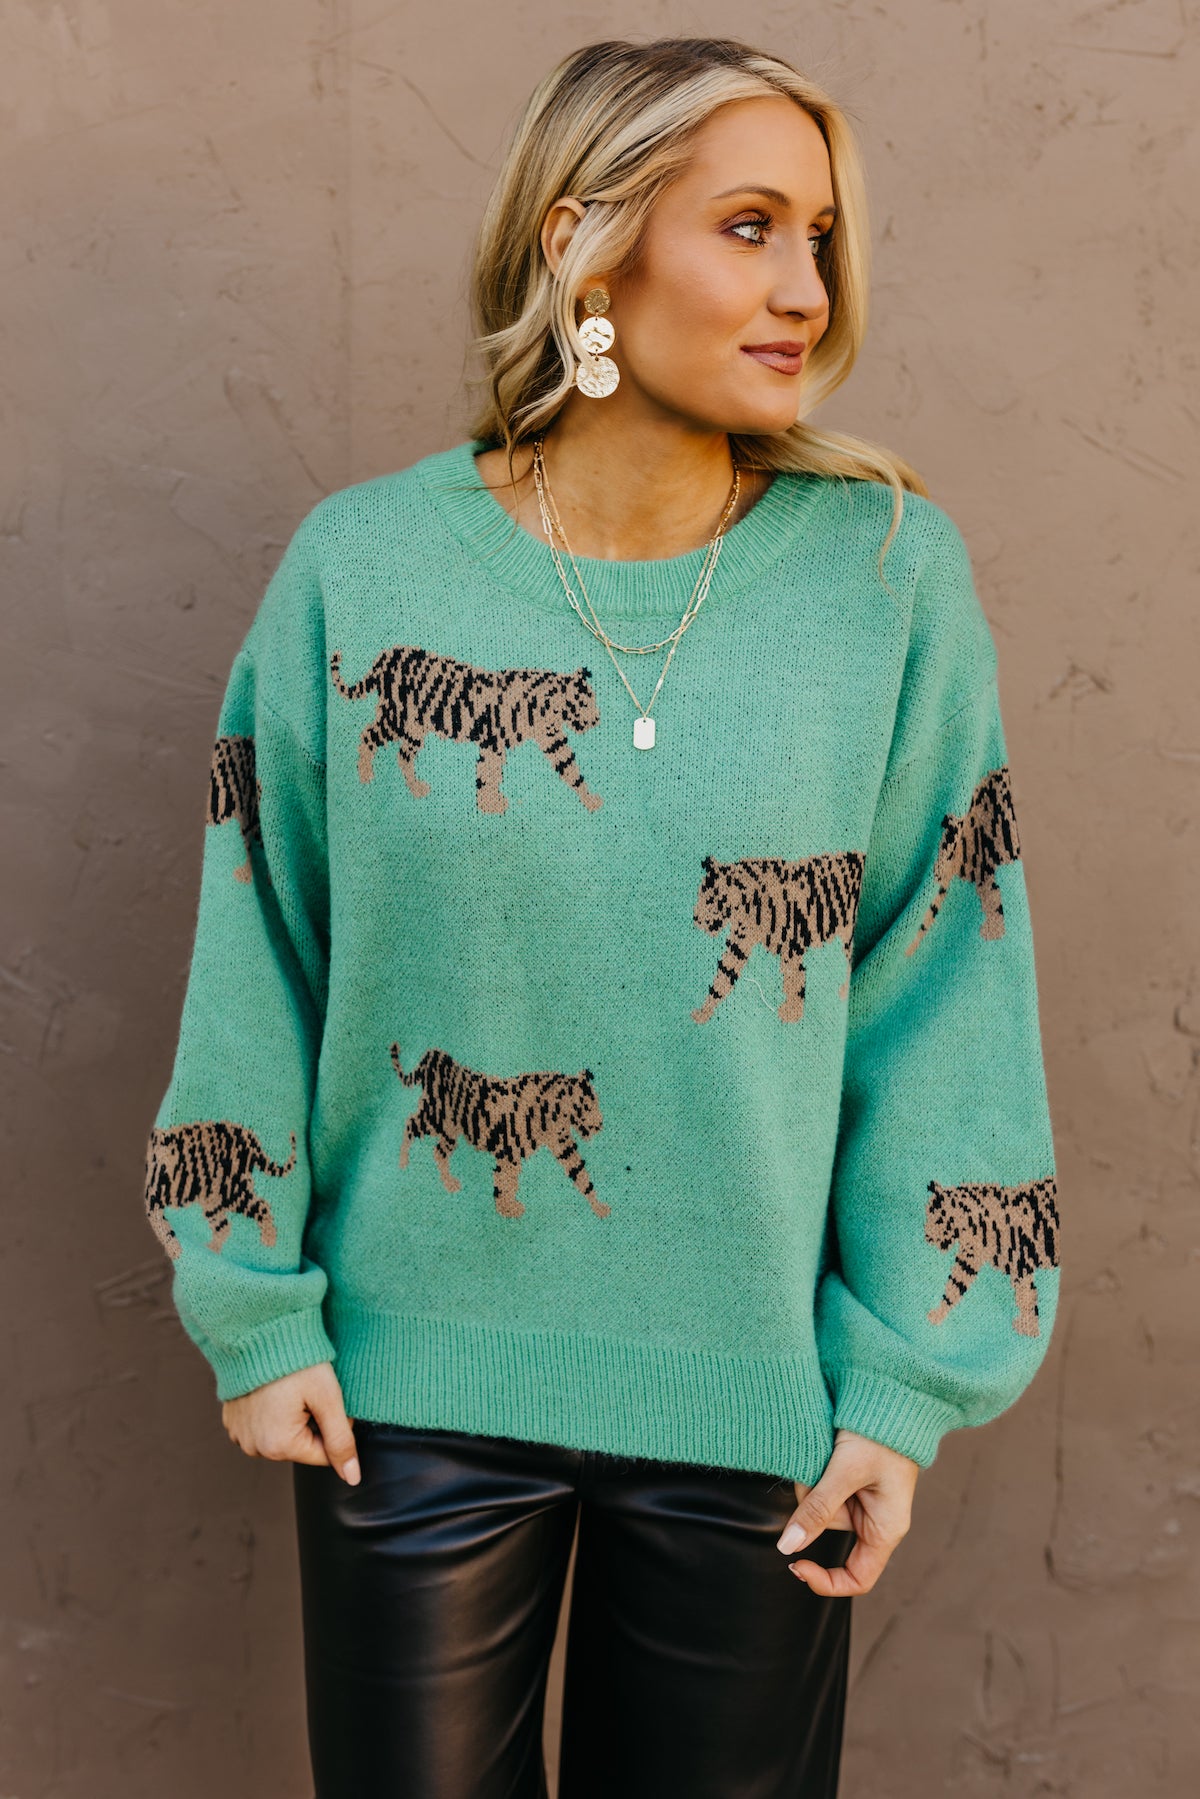 The Merrick Animal Pattern Sweater